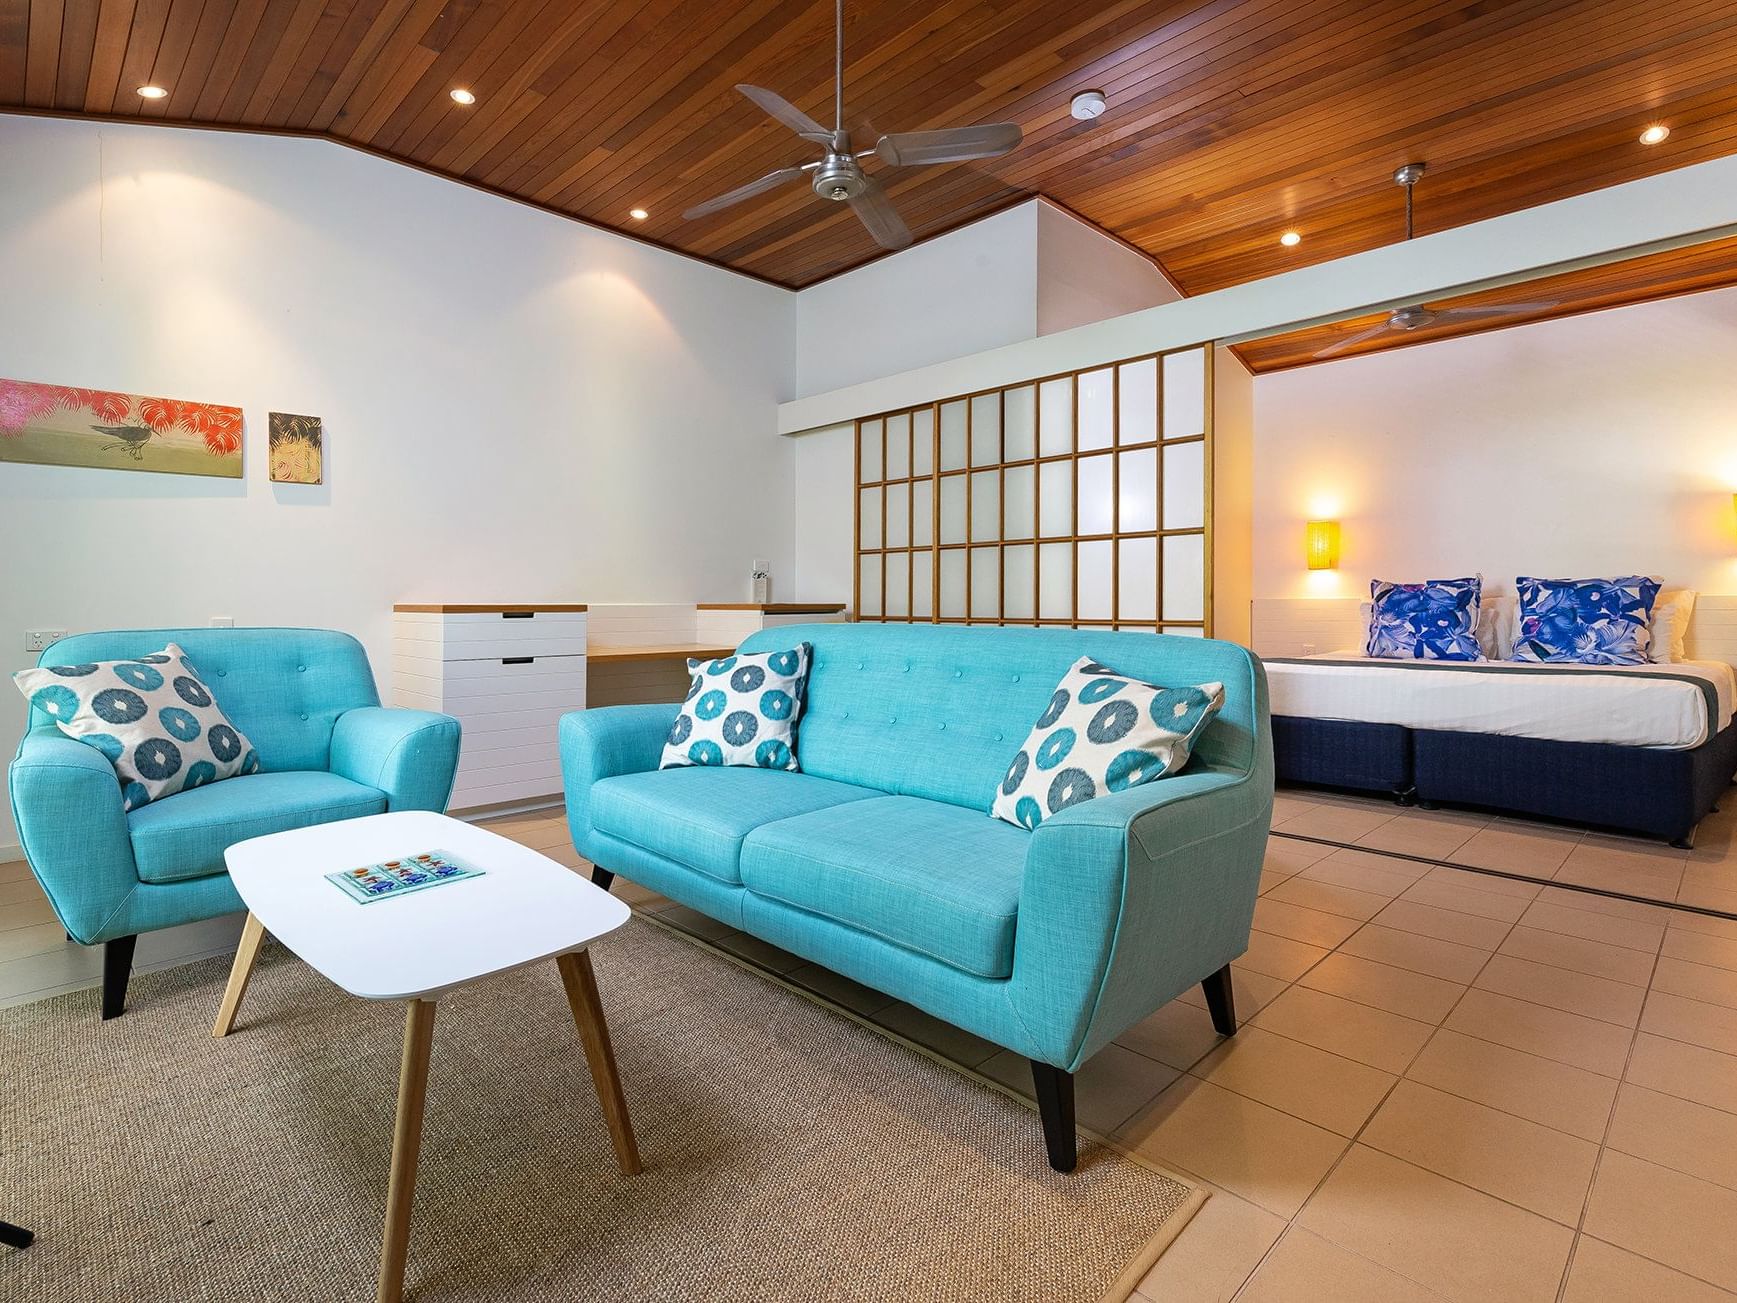 Wistari Suite with living space at Heron Island Resort